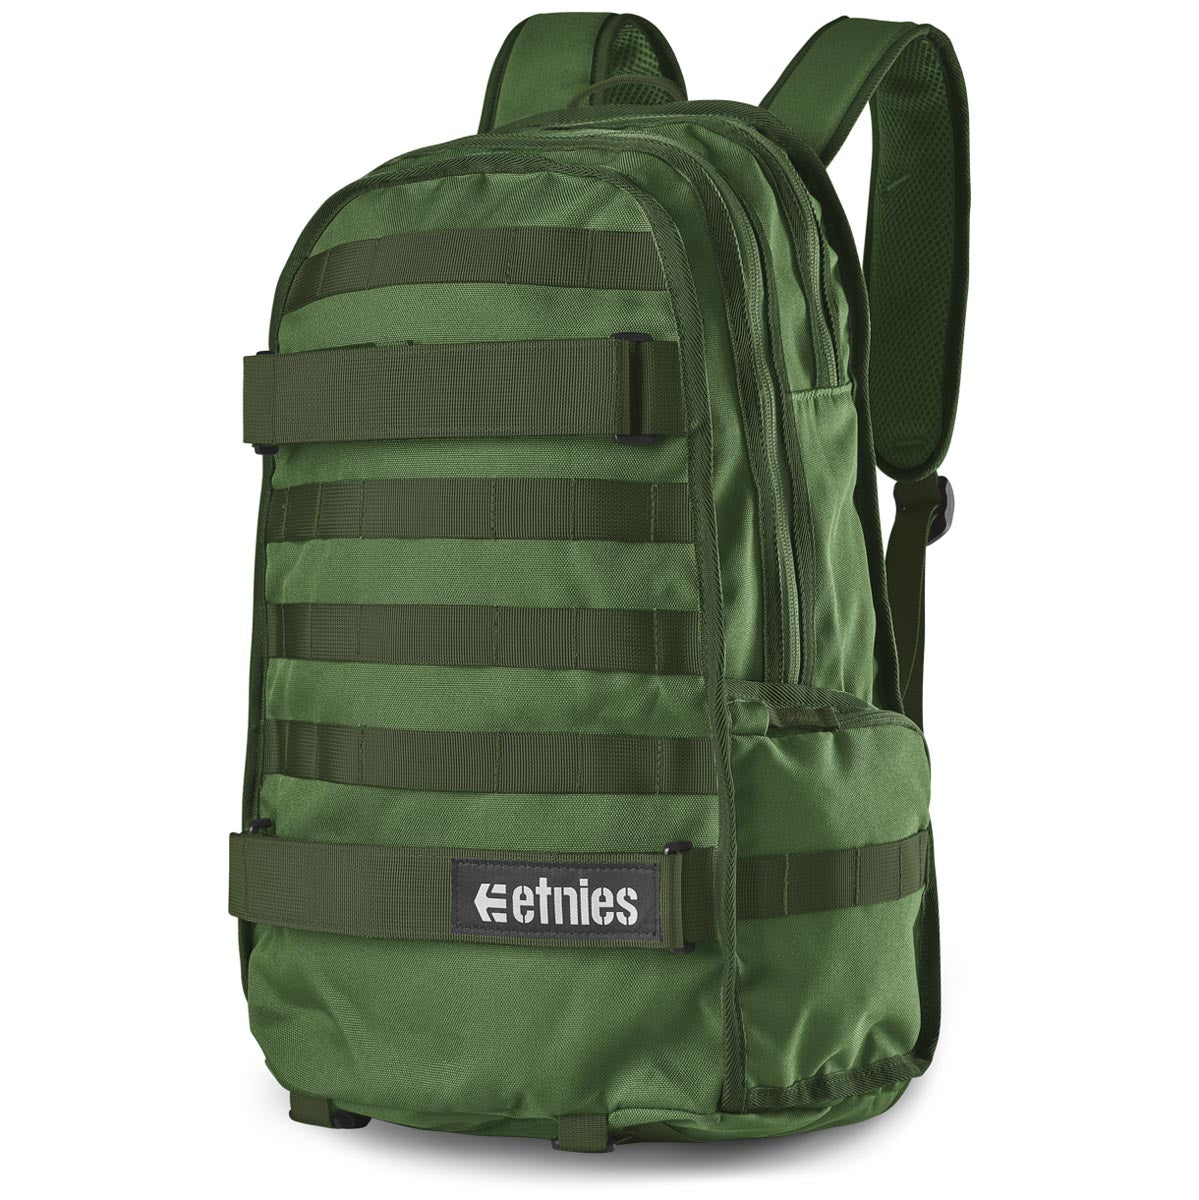 Etnies Marana Backpack - Army image 1